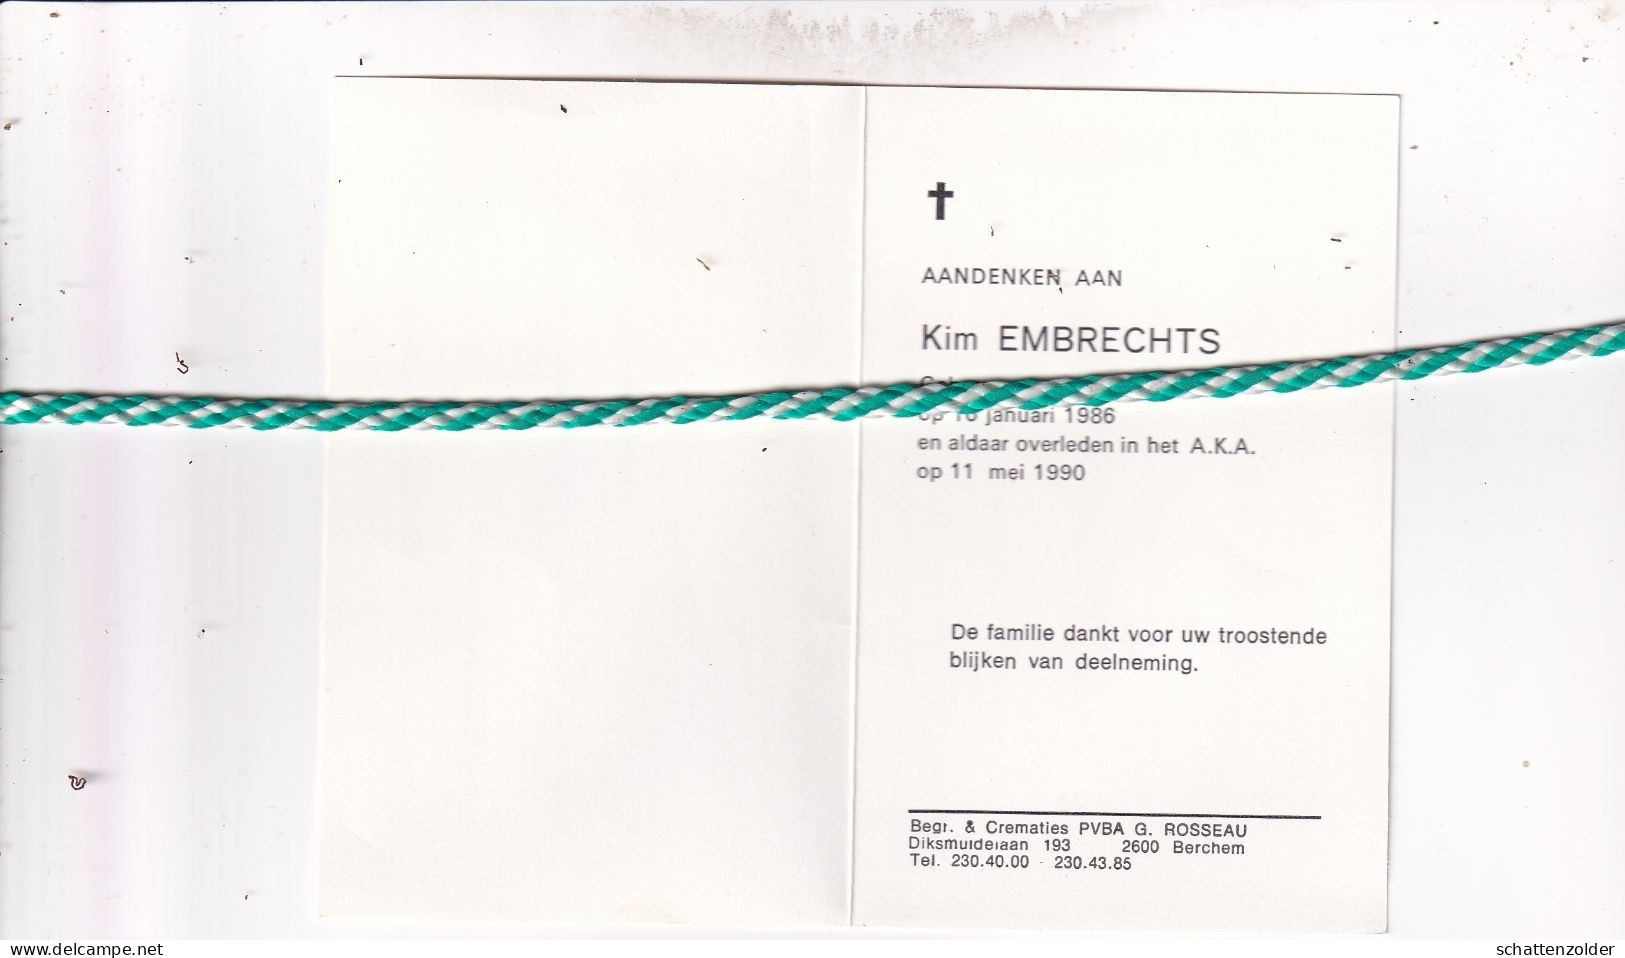 Kim Embrechts, Antwerpen 1986, 1990 - Obituary Notices